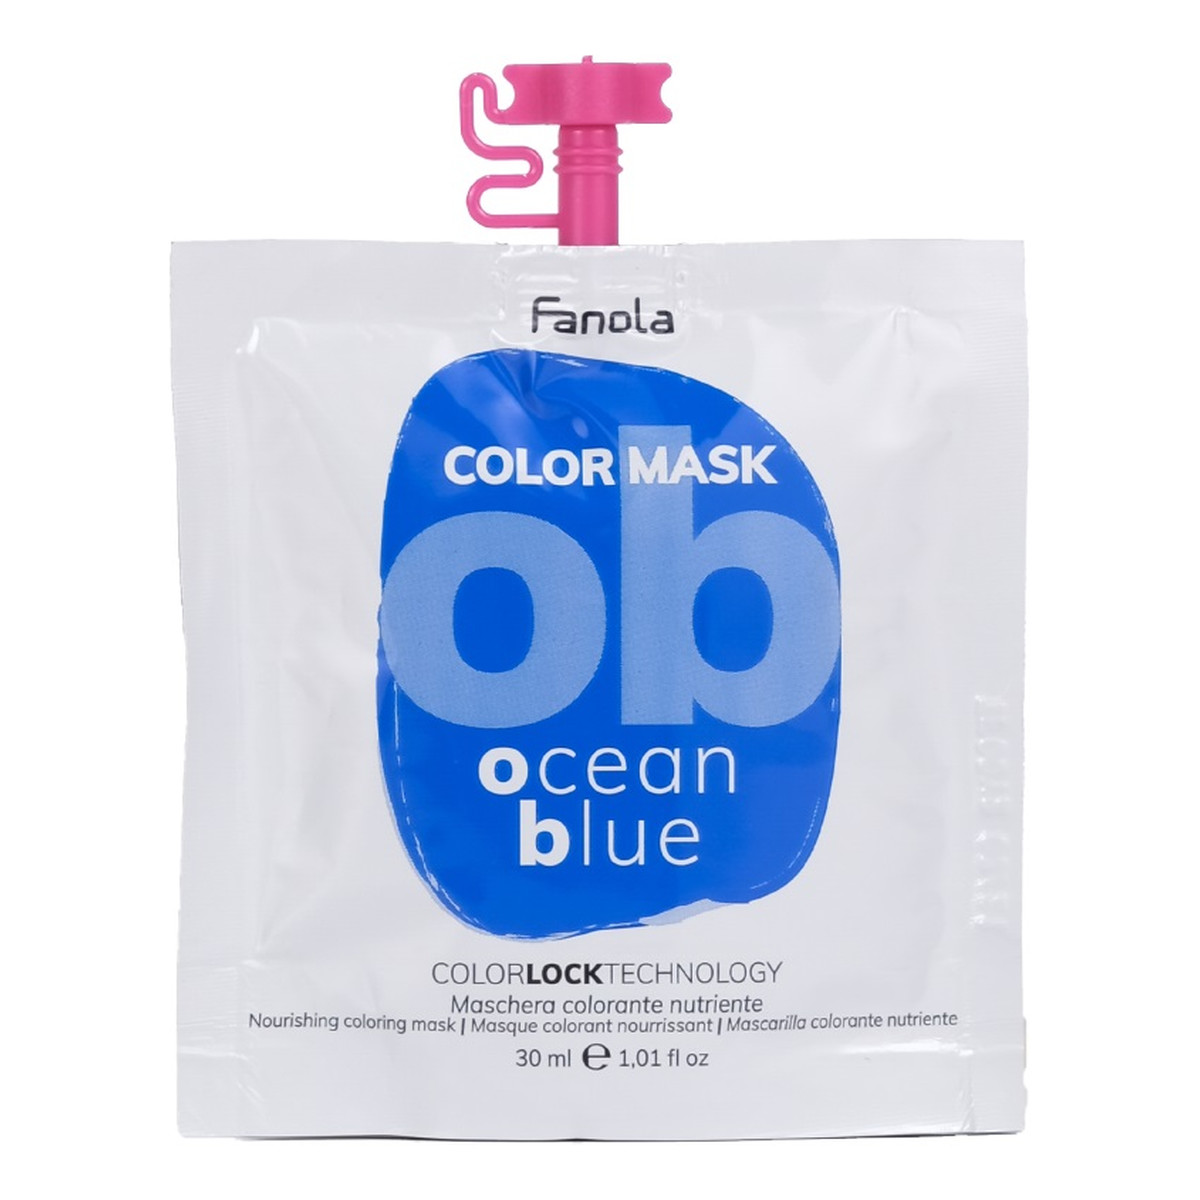 Fanola Color mask maska koloryzująca do włosów ocean blue 30ml